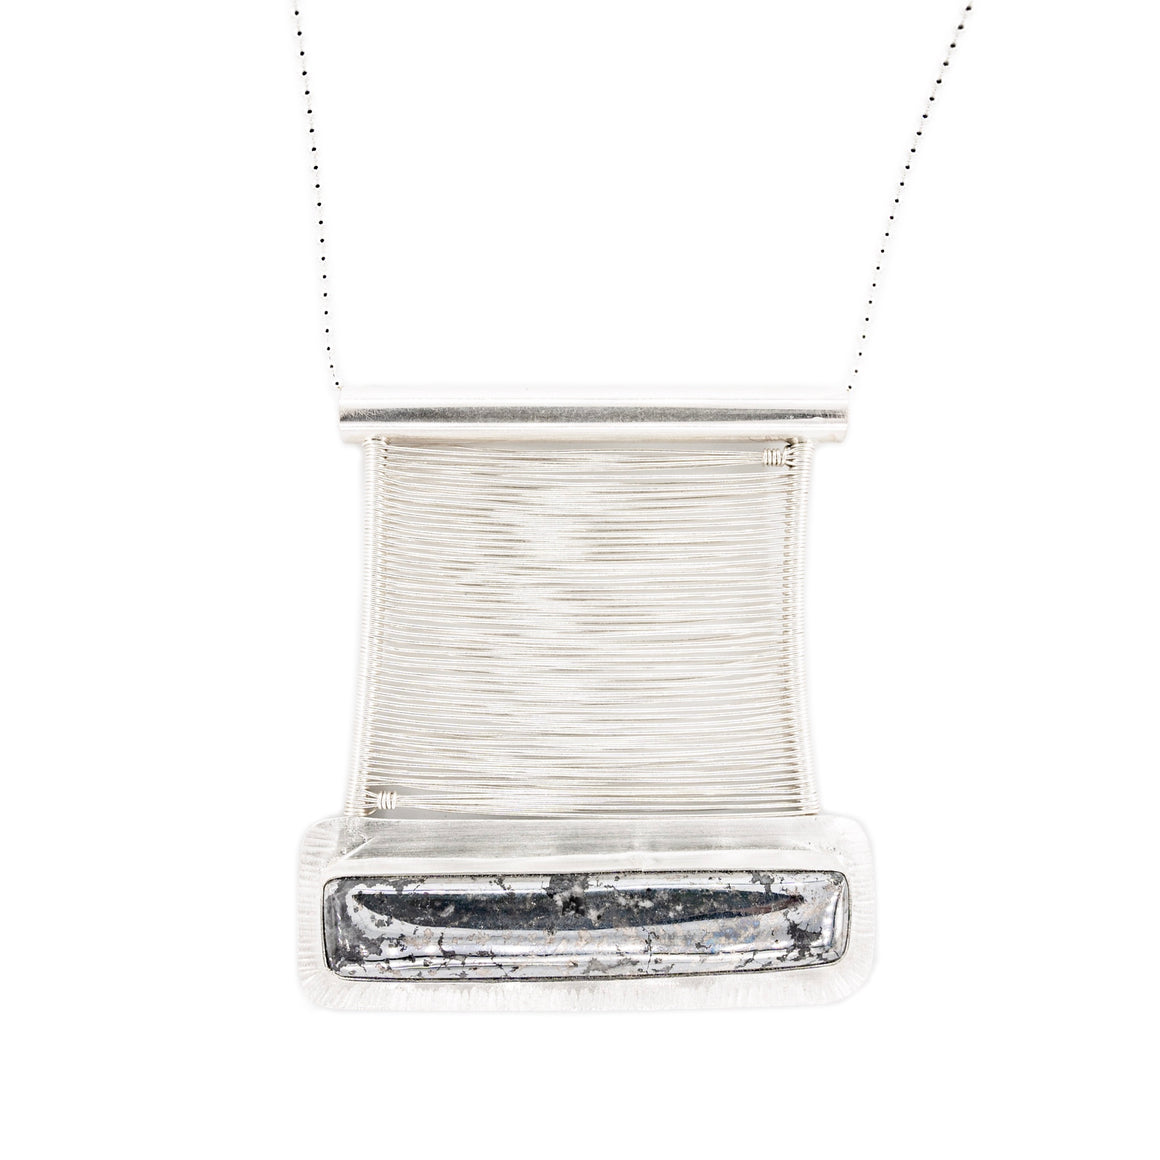 Native Silver Woven Fine Silver Bridge Pendant on Sterling Silver Necklace by Original Sin Jewelry